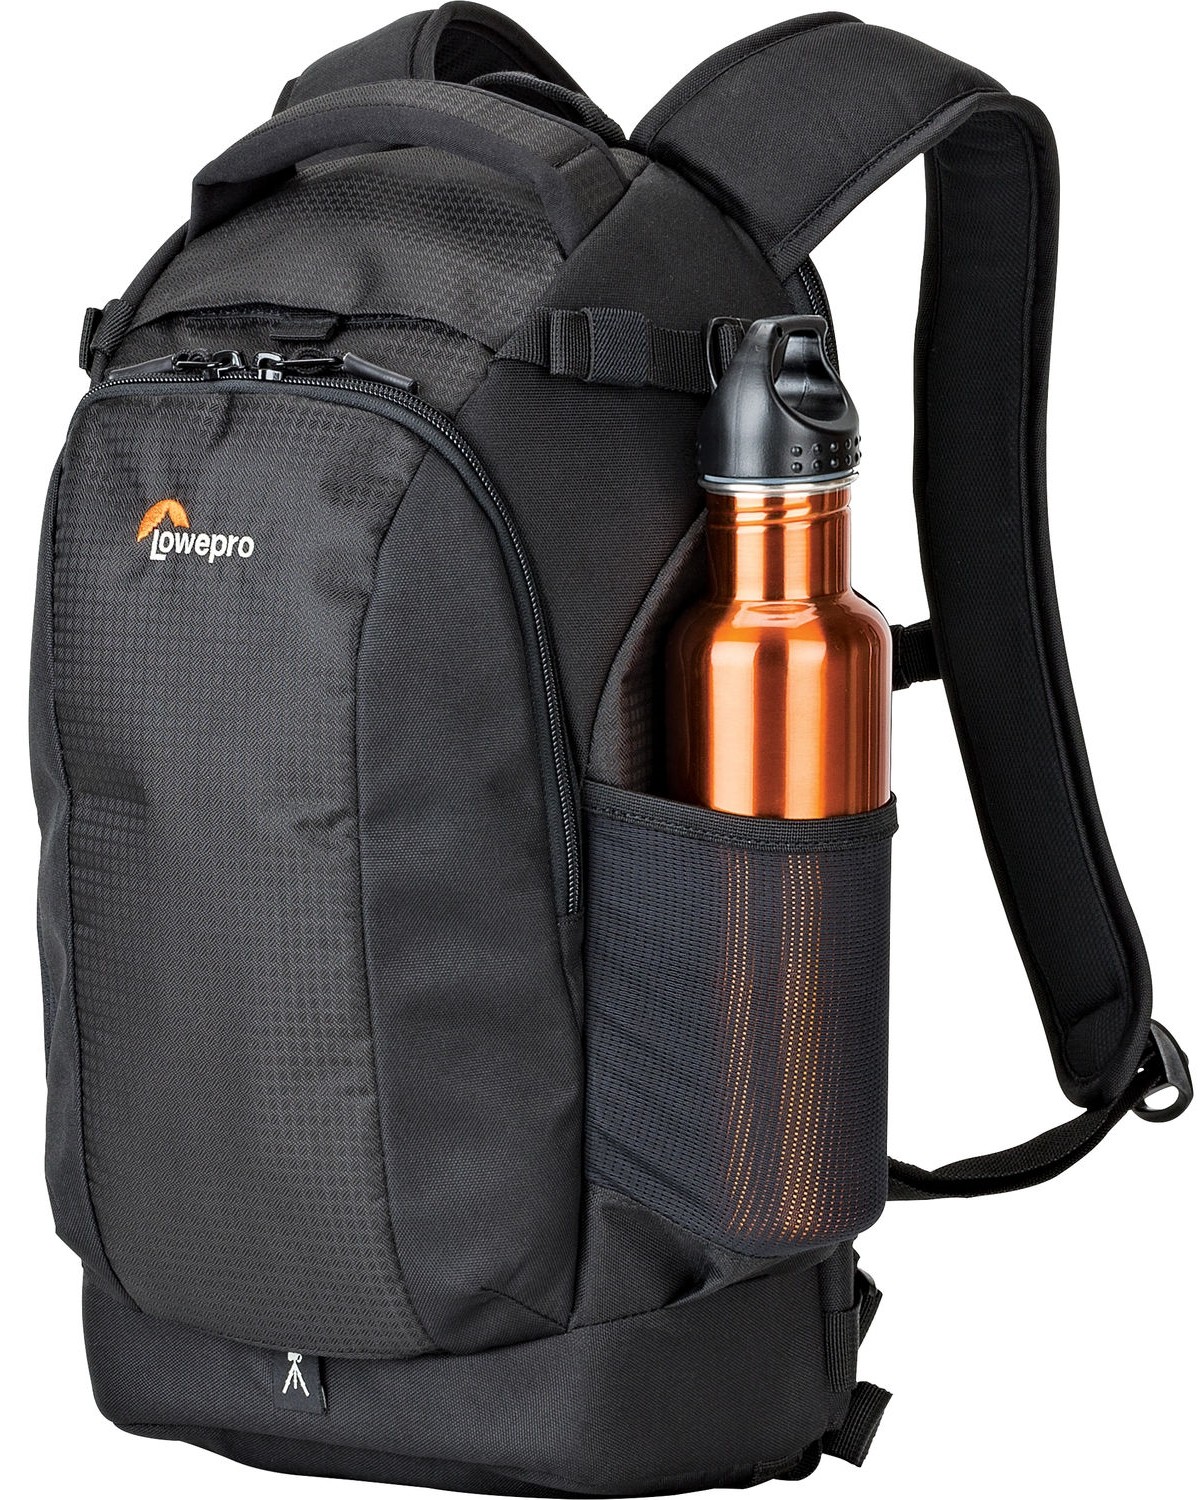 Рюкзак для фотокамеры Lowepro Flipside 200 AW II black